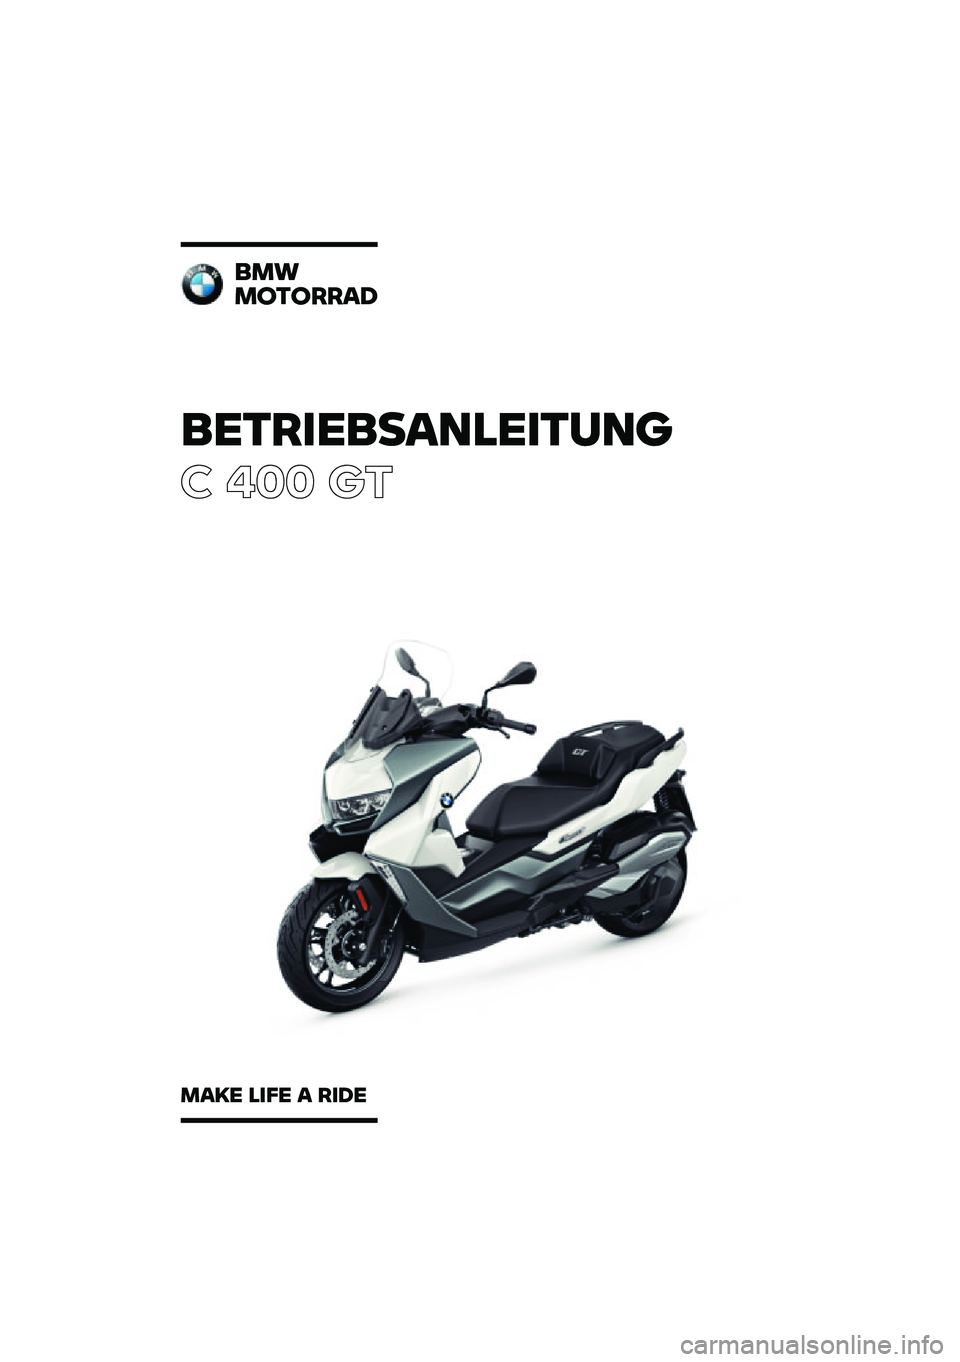 BMW MOTORRAD C 400 GT 2020  Betriebsanleitung (in German) ���������\b�	�
�����	�\f
� ��� ��\b
��
�
�
������\b�
�
�\b�� �
��� �\b ���� 